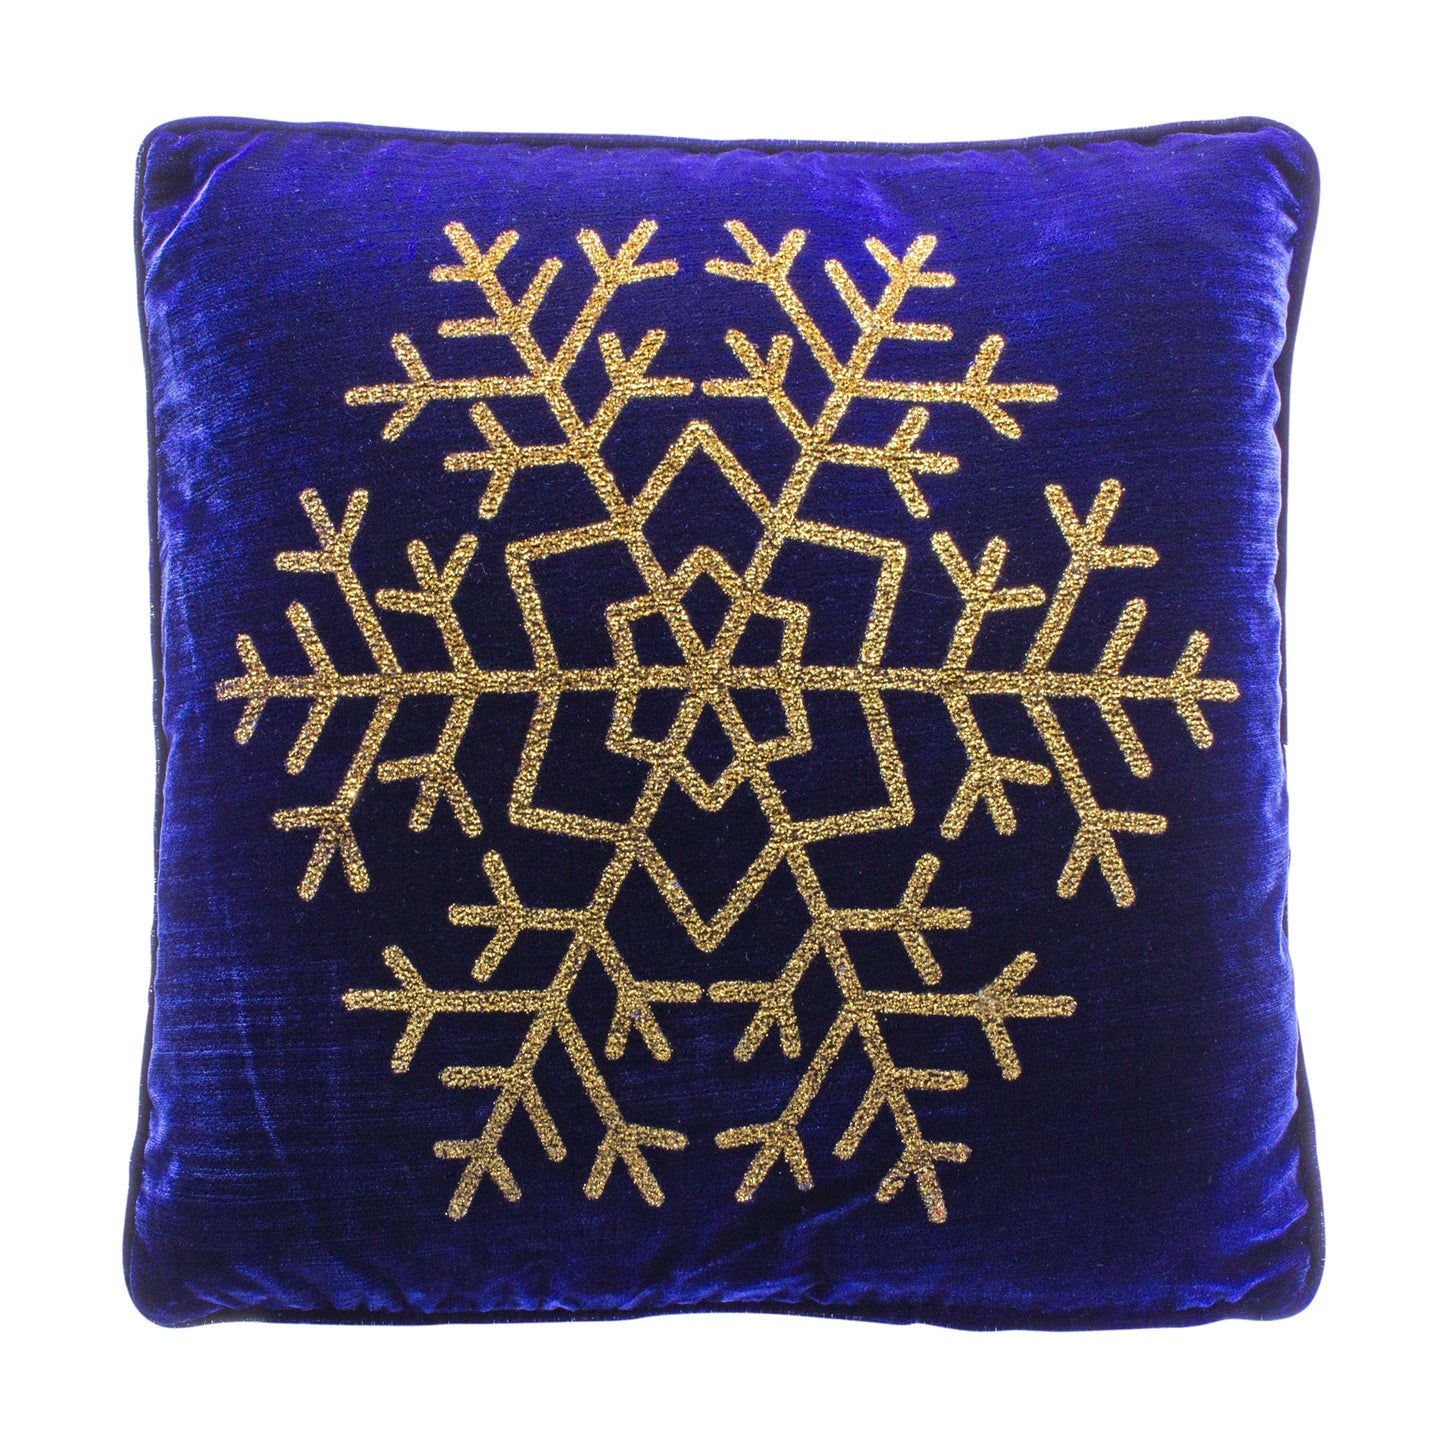 Blue Snowflake Pillow